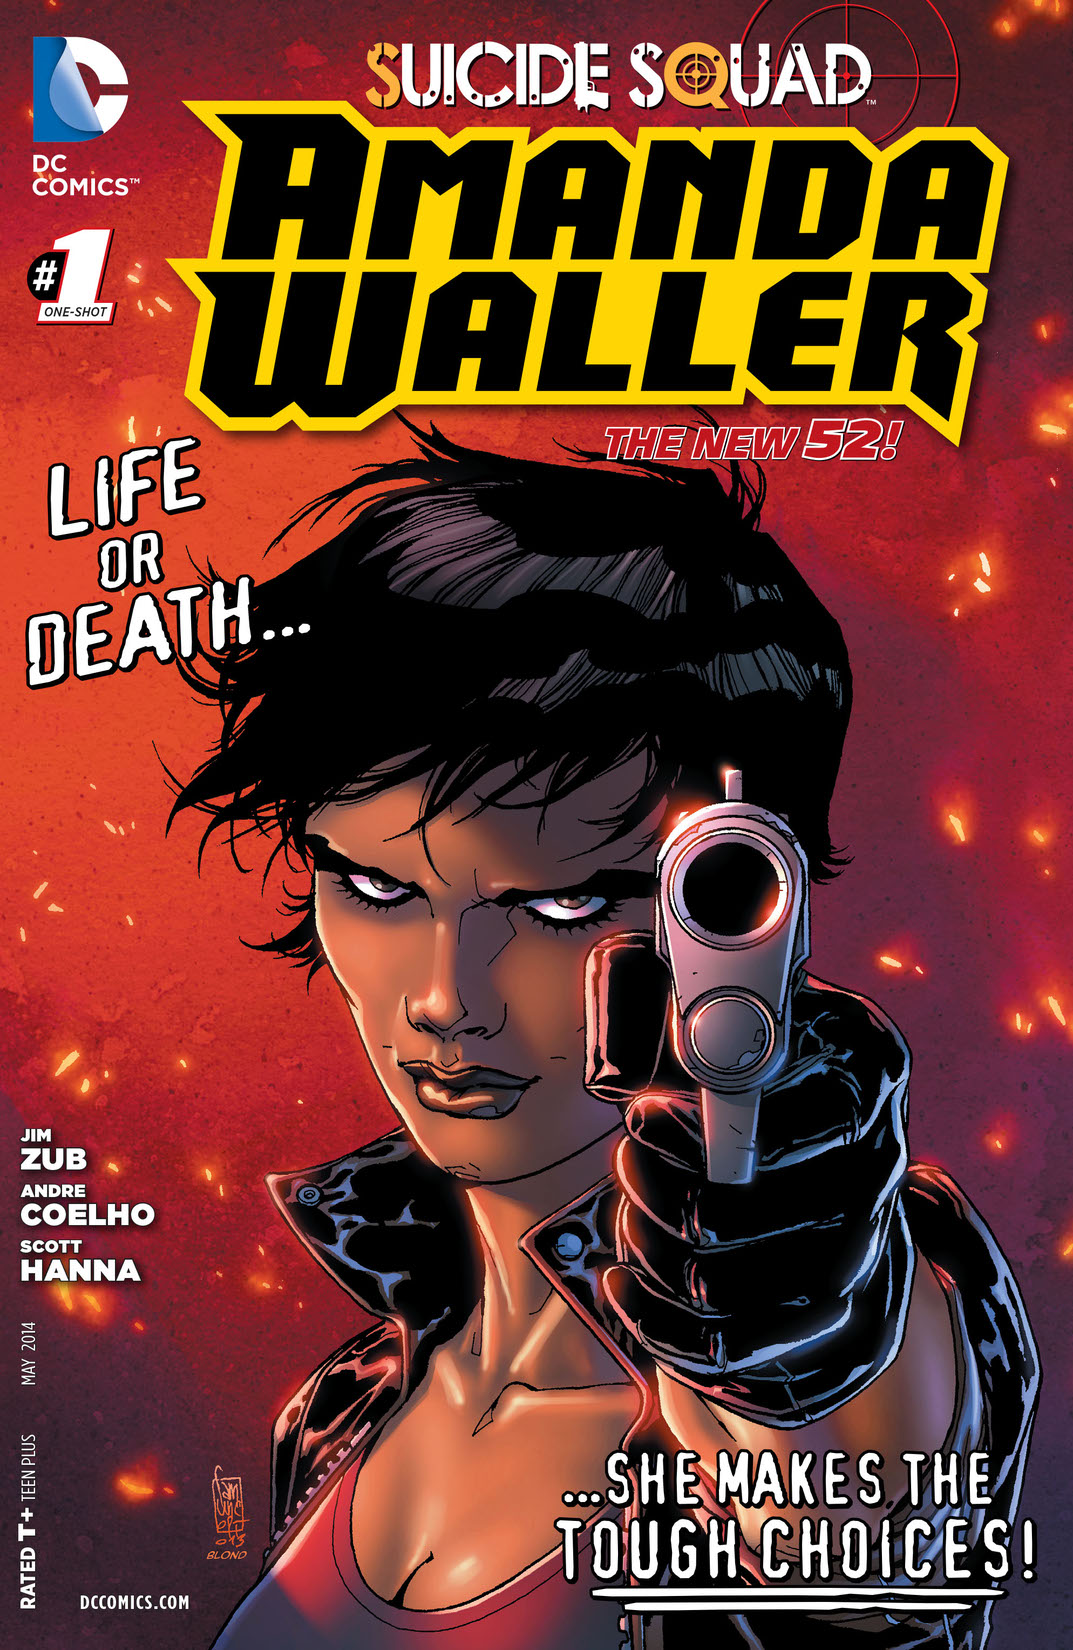 Suicide Squad: Amanda Waller #1 preview images